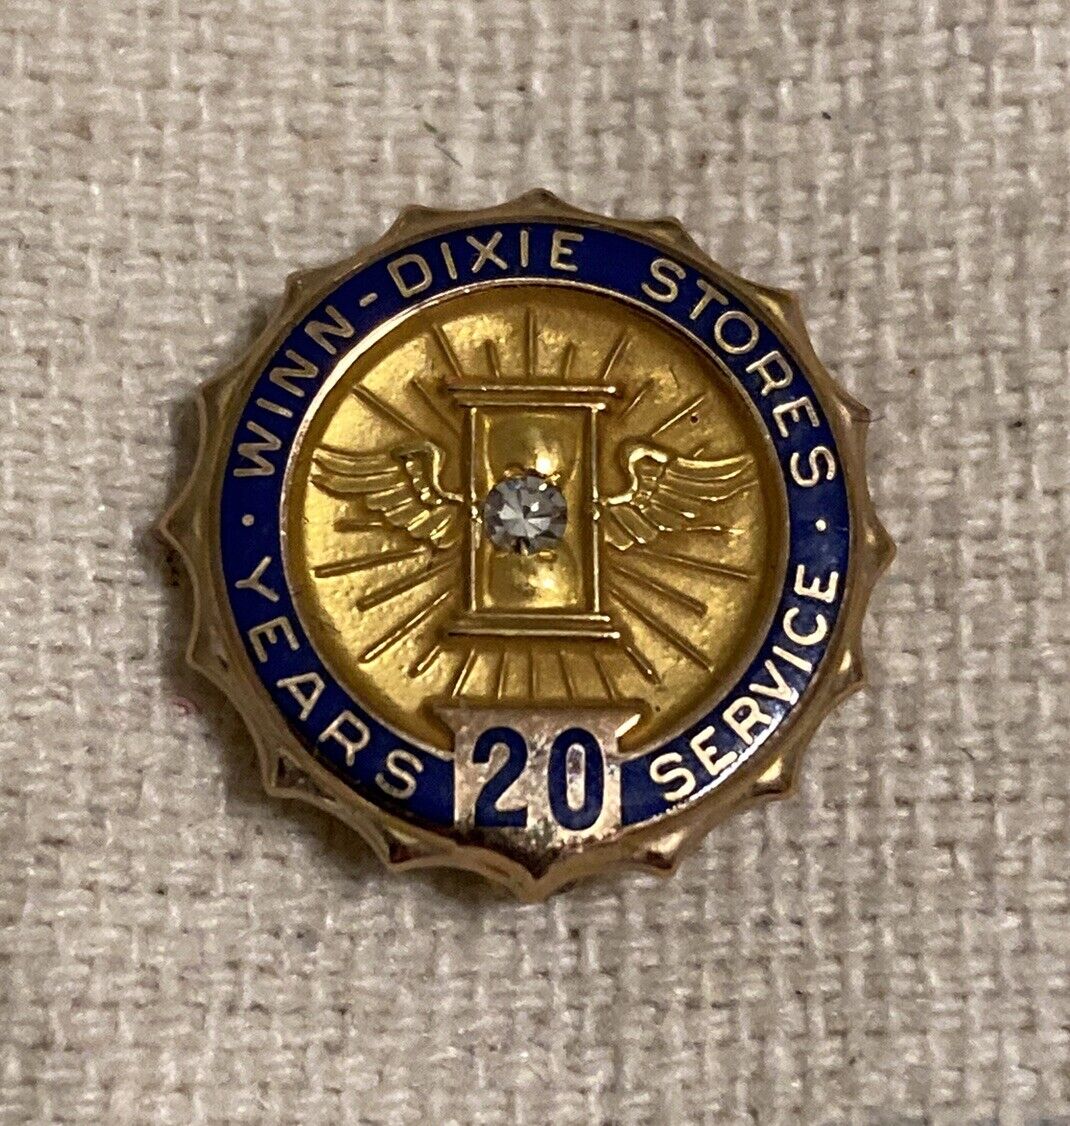 LGB Vintage Winn-Dixie Supermarket Grocery Store 20 Year Service Award Pin